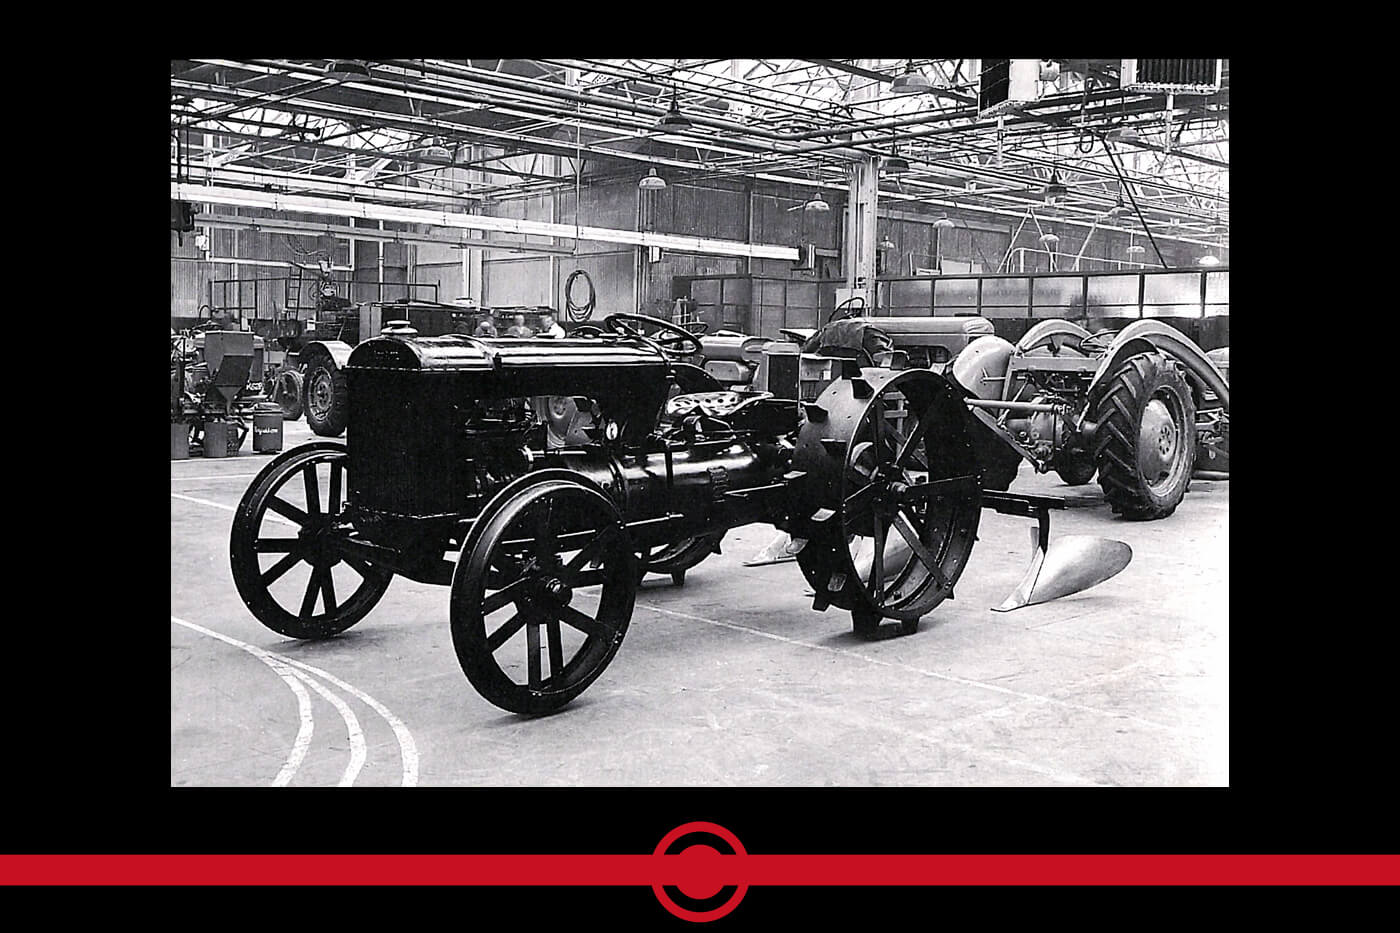 1933 - Creación del sistema Ferguson (prototipo del "Ferguson Black")